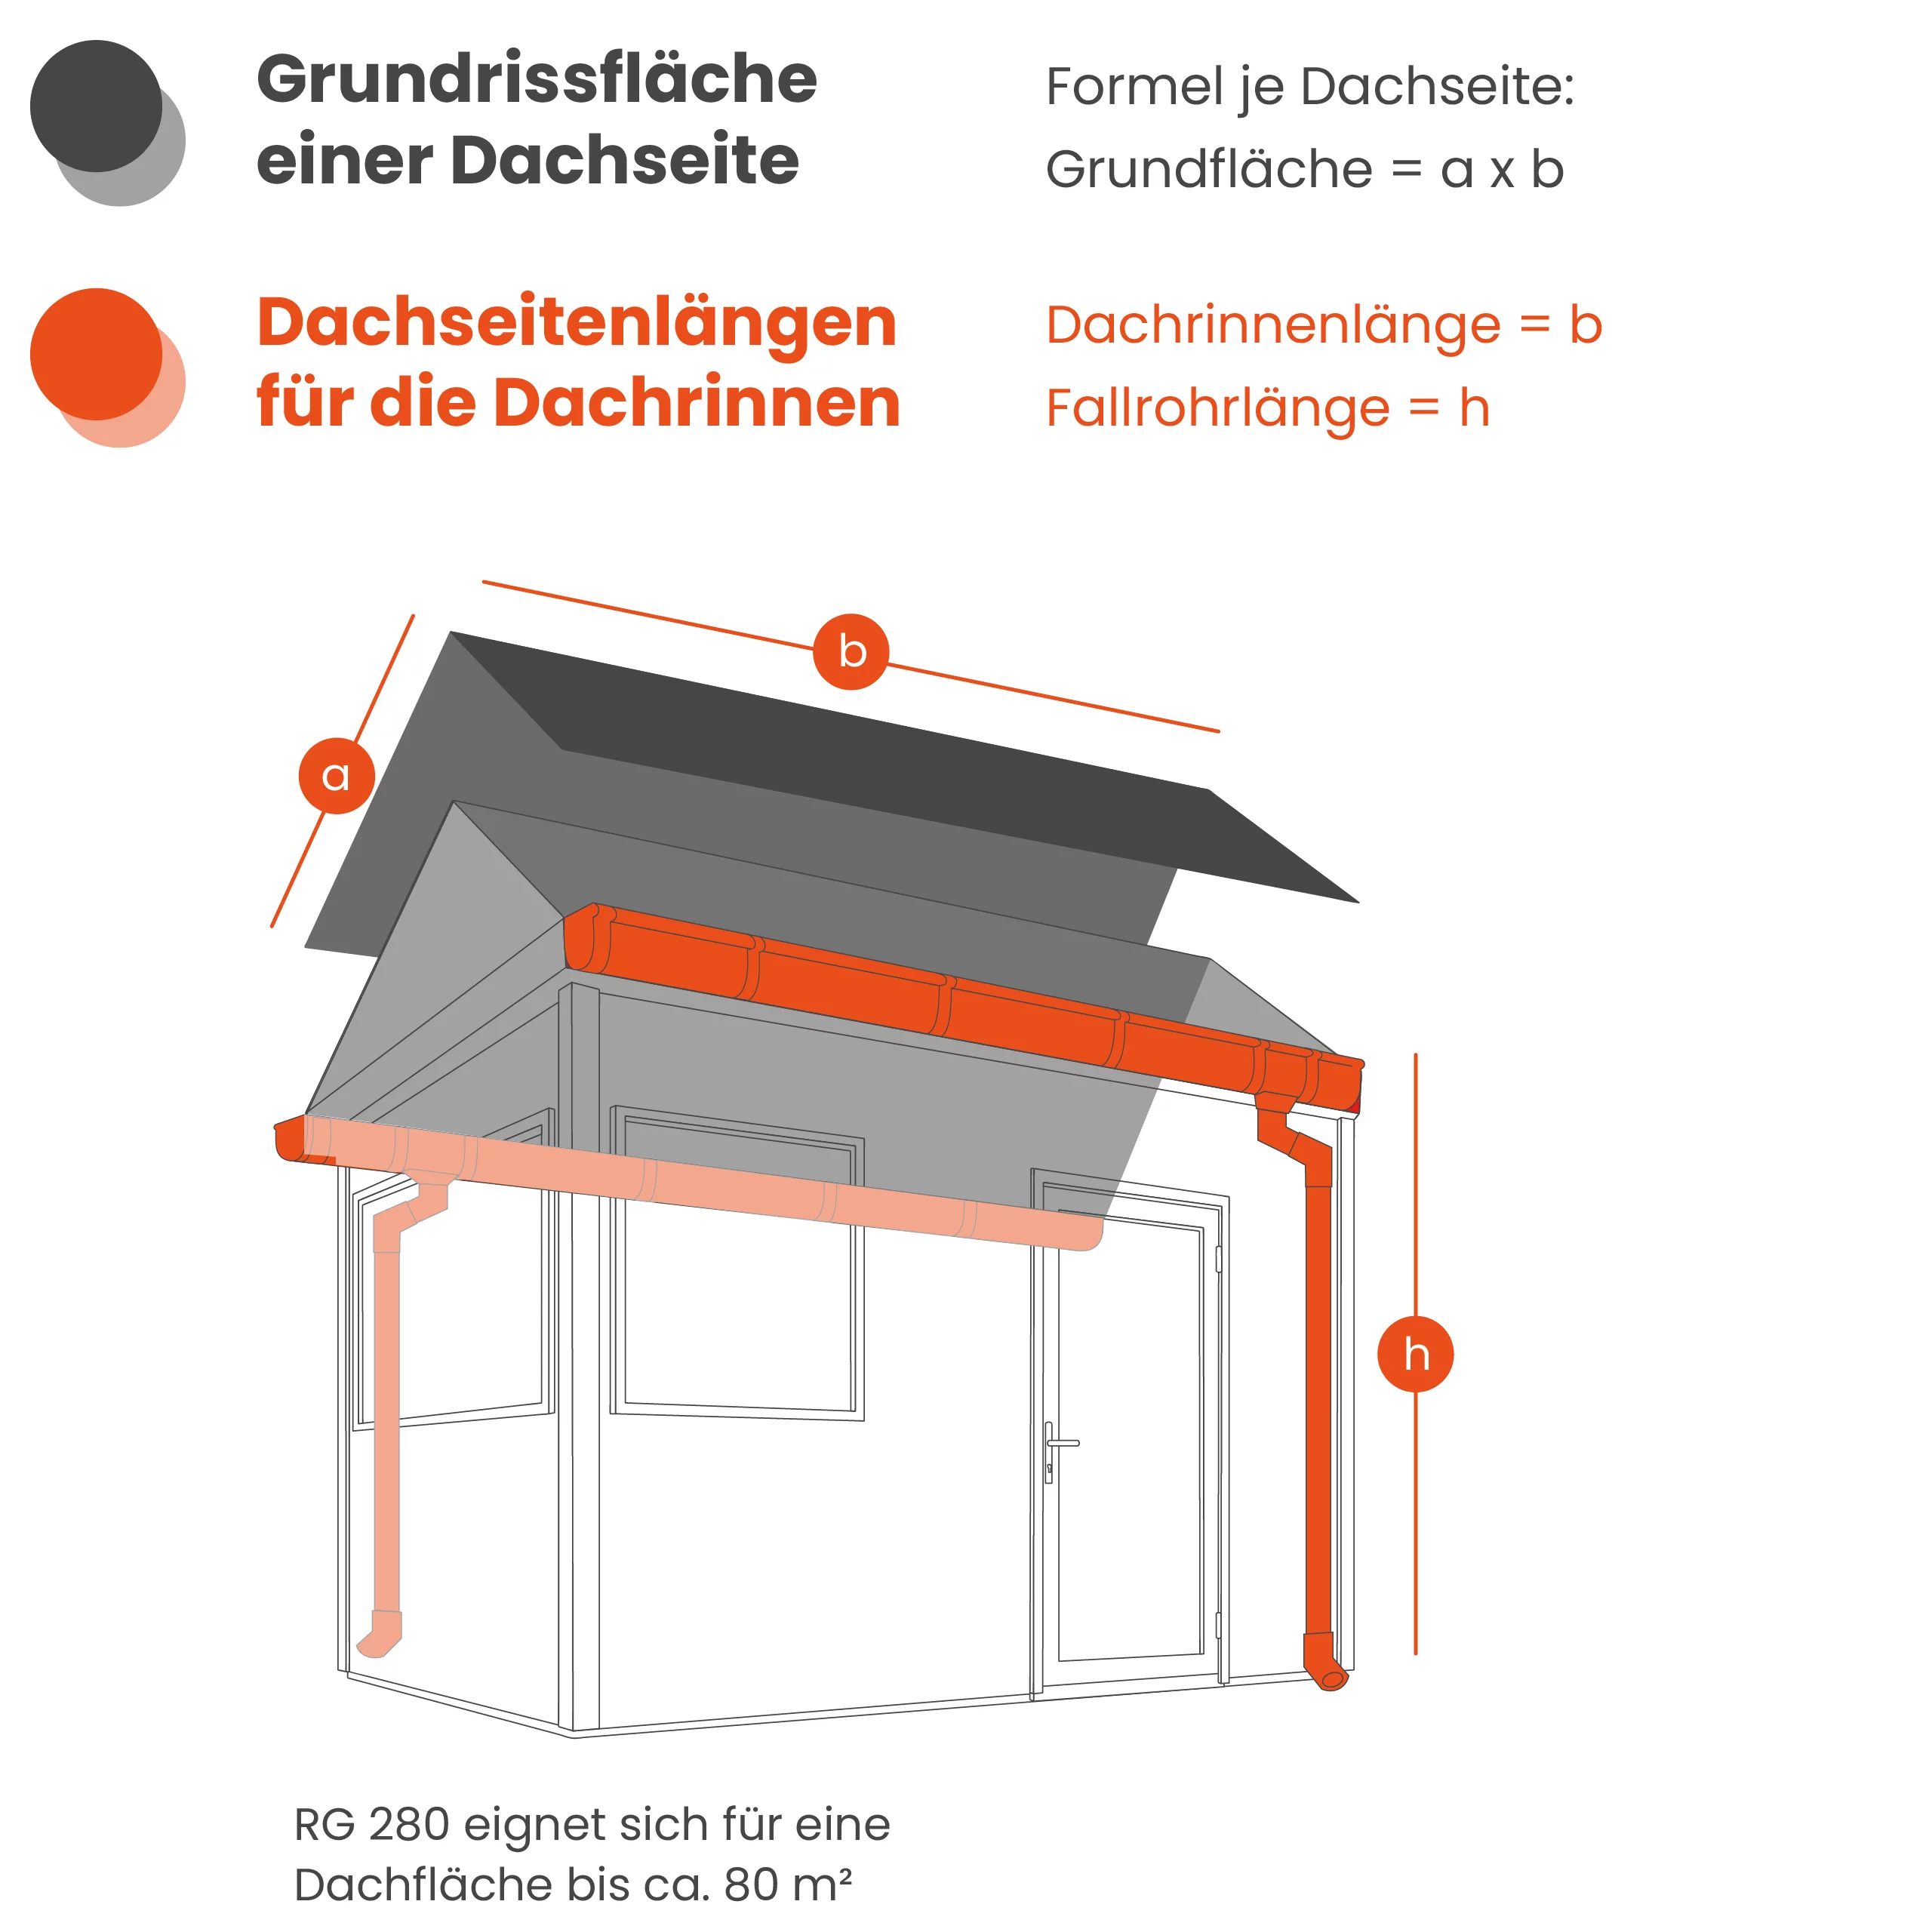 zink-dachrinne-komplettset-gartenhaus-7-teilig-silber-2m